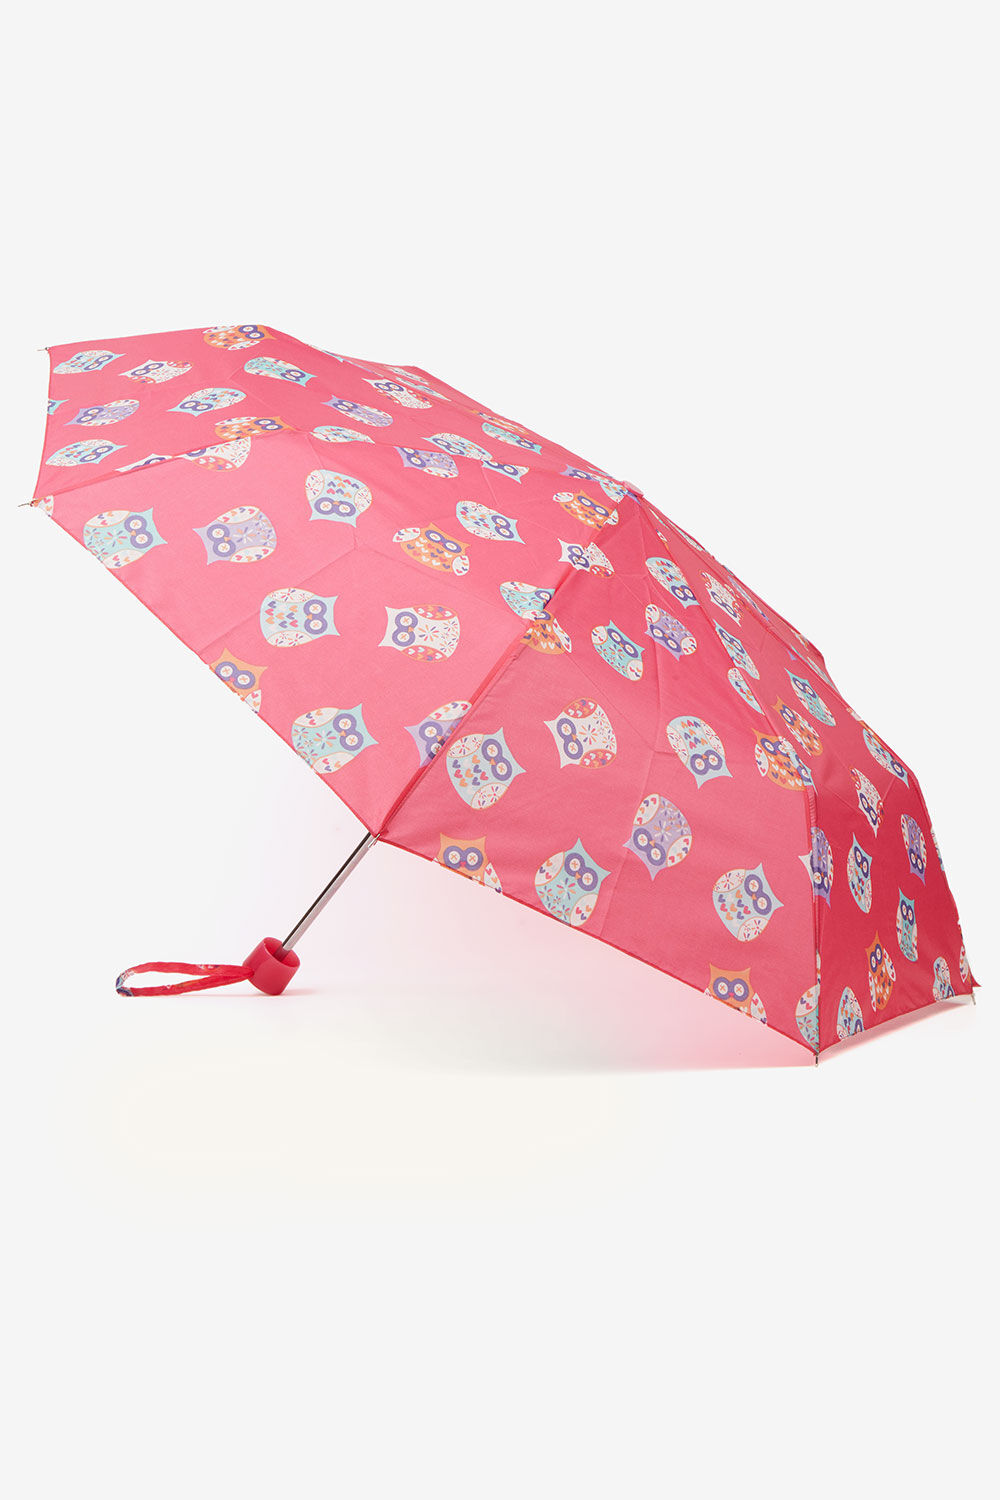 Bonmarche Pink Owl Print Compact Umbrella, Size: One Size